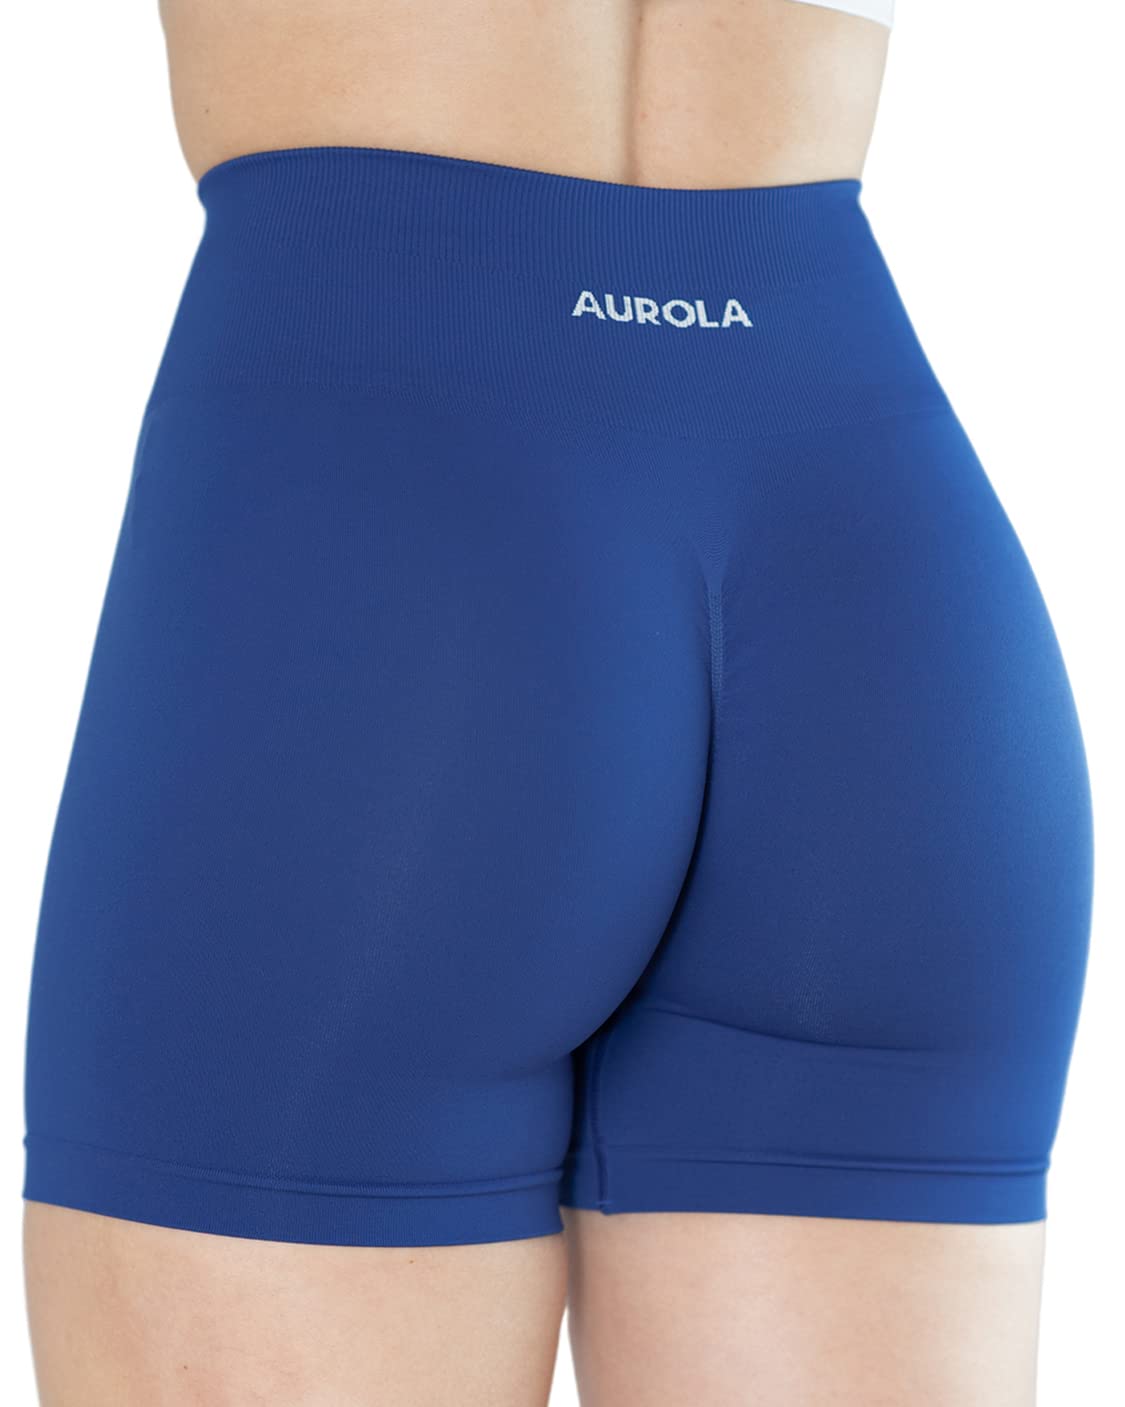 Aurola AUROLA Dream collection Workout Shorts for Women High Waist Seamless  Scrunch Athletic Running gym Yoga Active Shorts, Surf The W